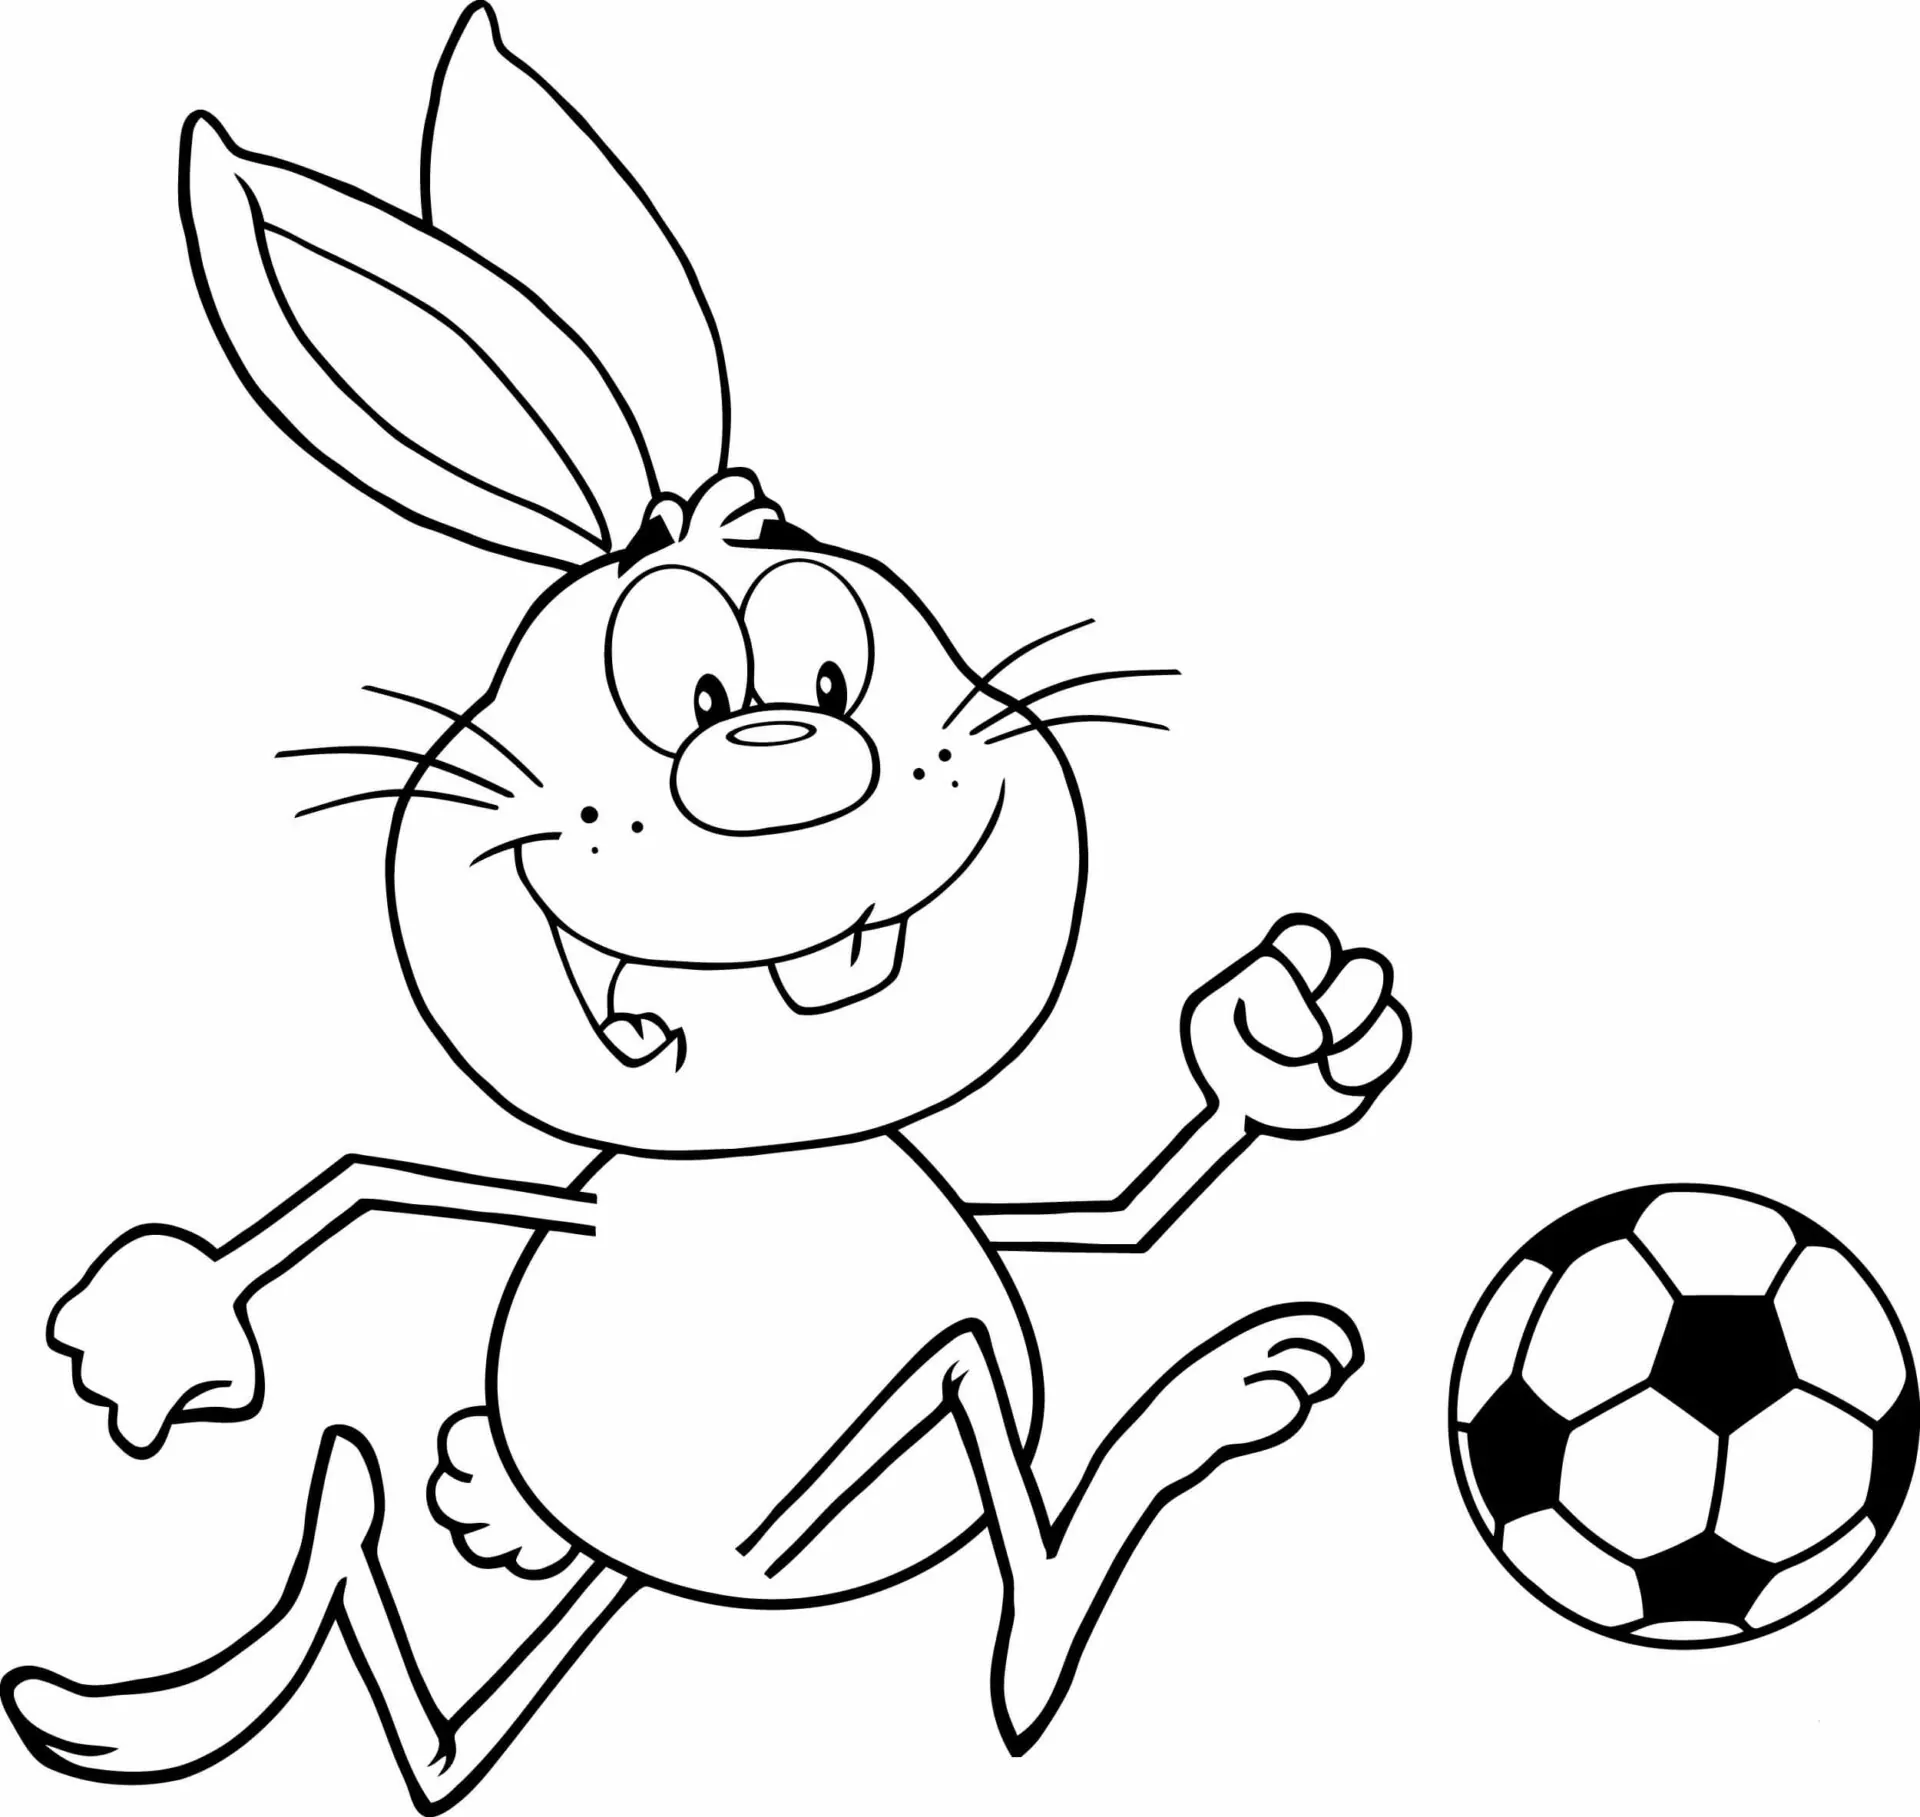 Rabbit Playing Soccer